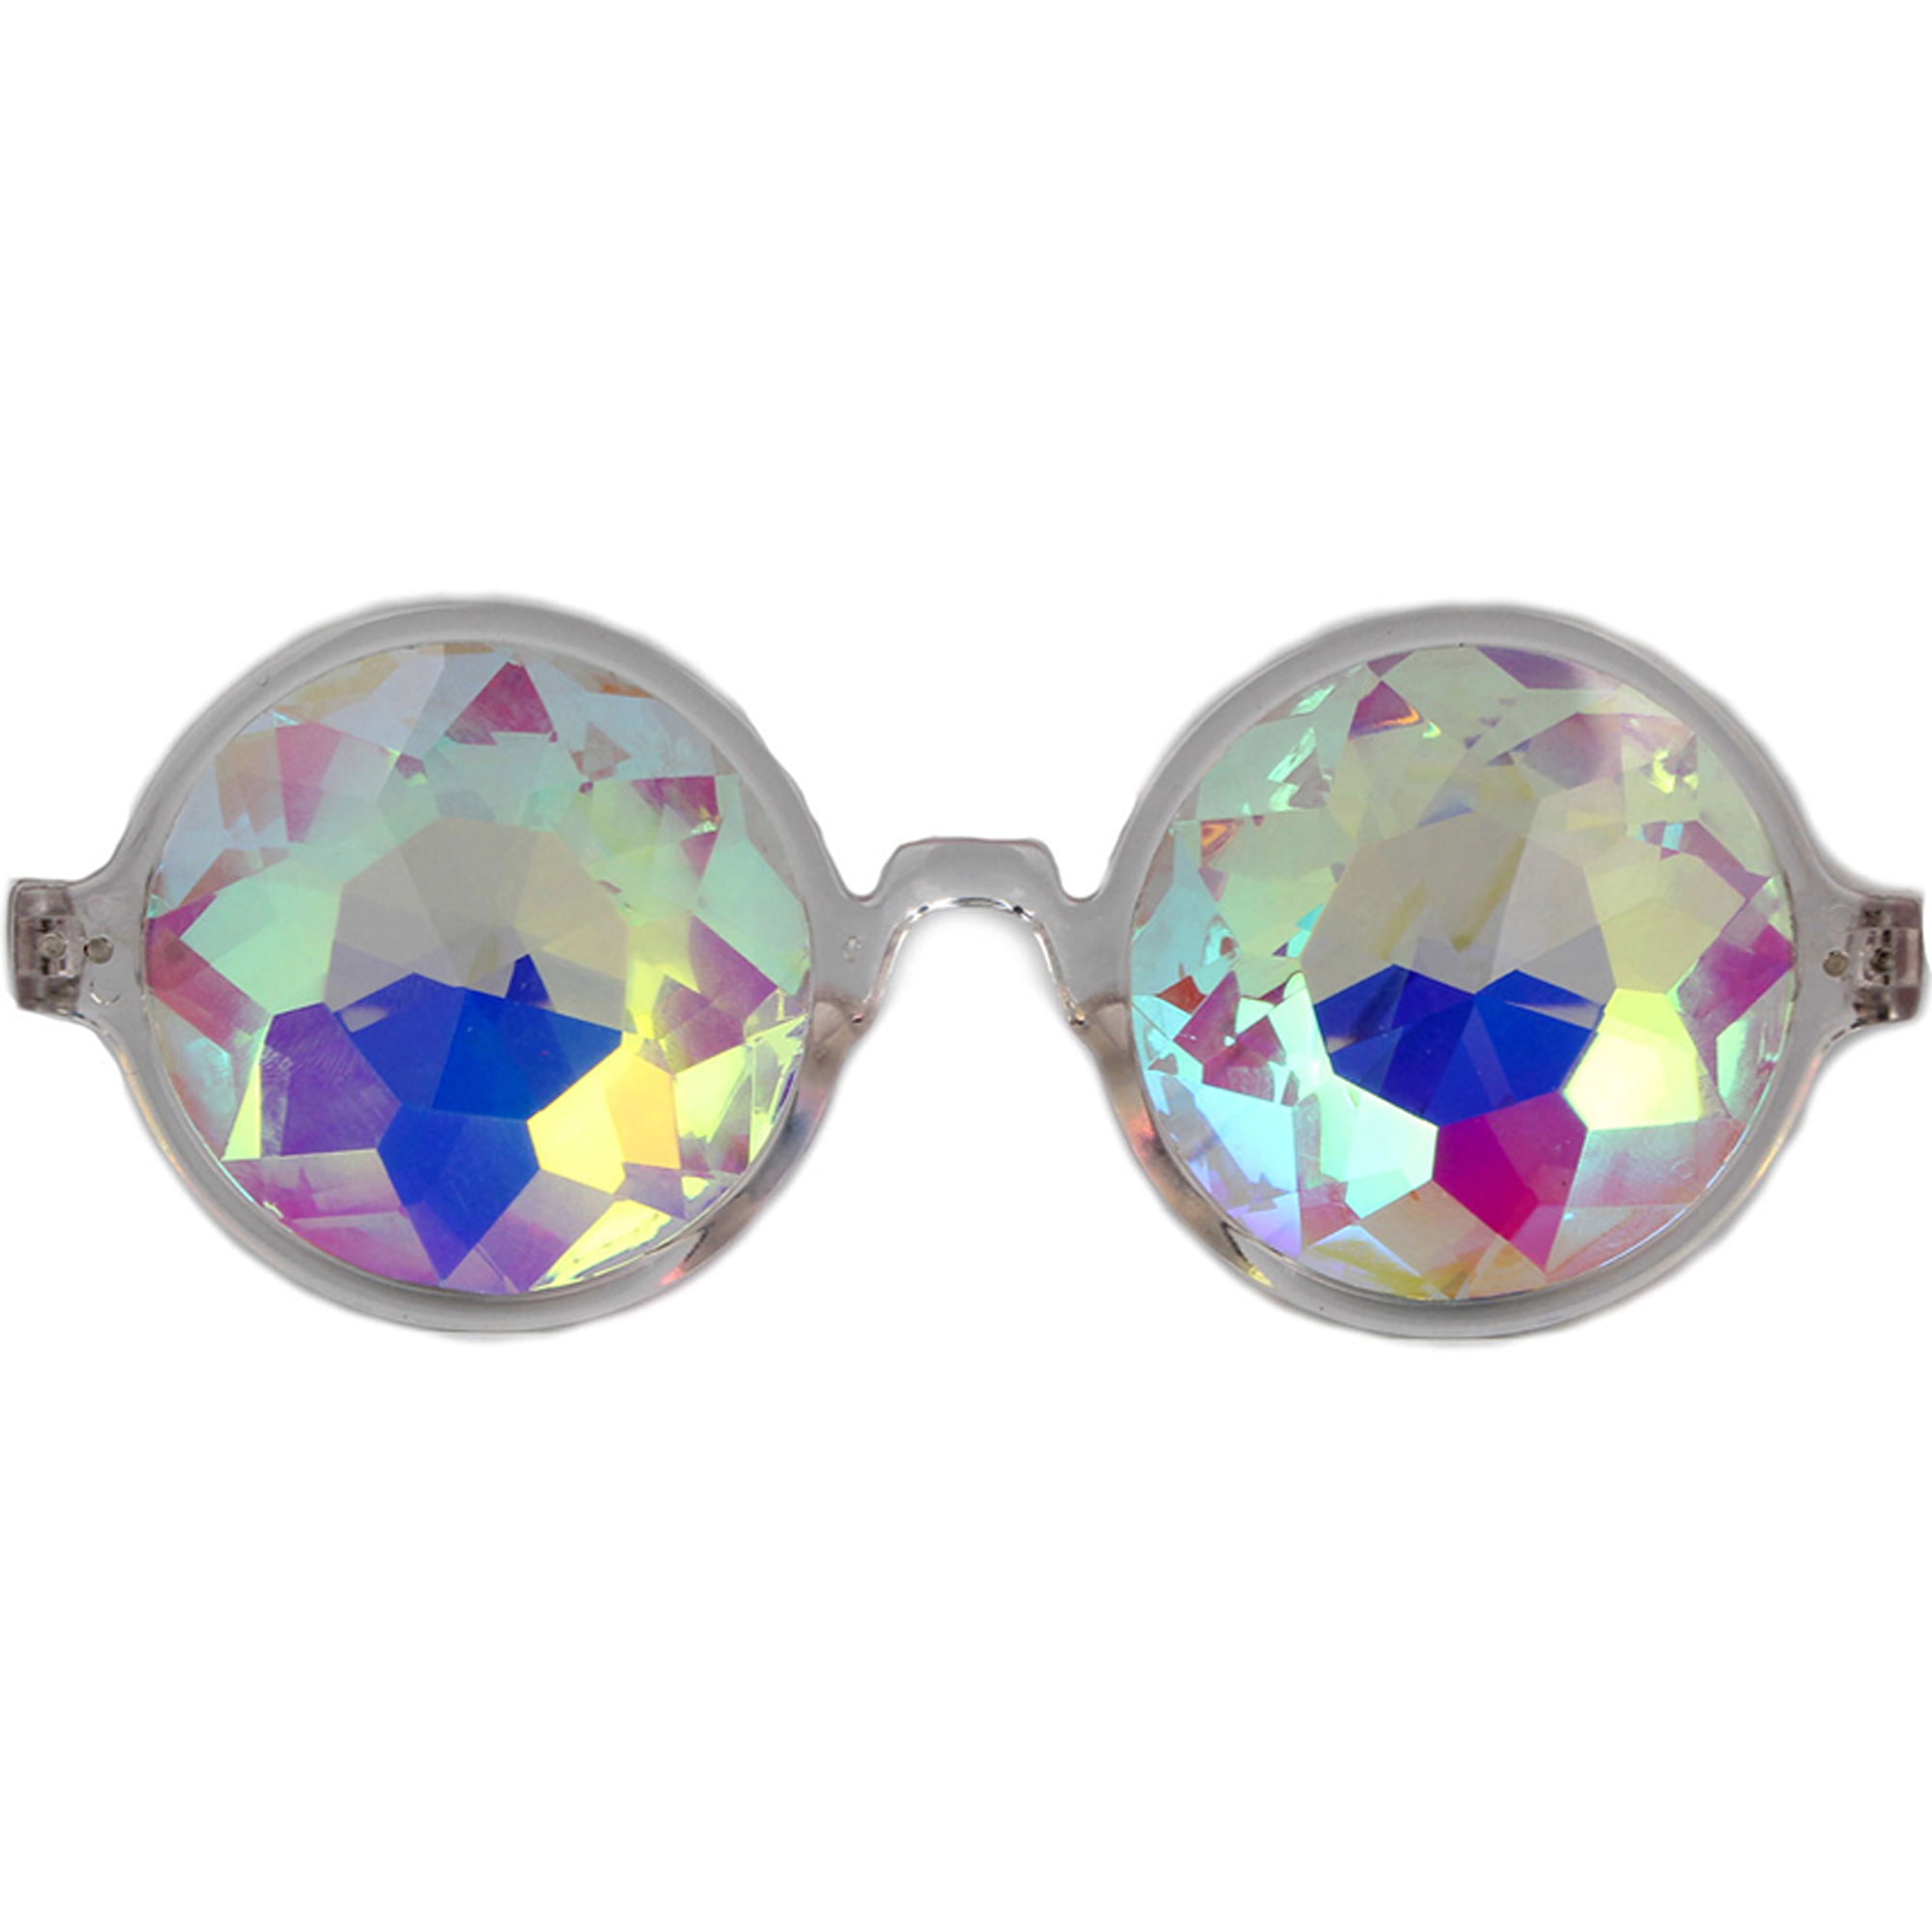 3 Colors Festivals Rave Kaleidoscope Goggles Rainbow Glasses Prism Diffraction 